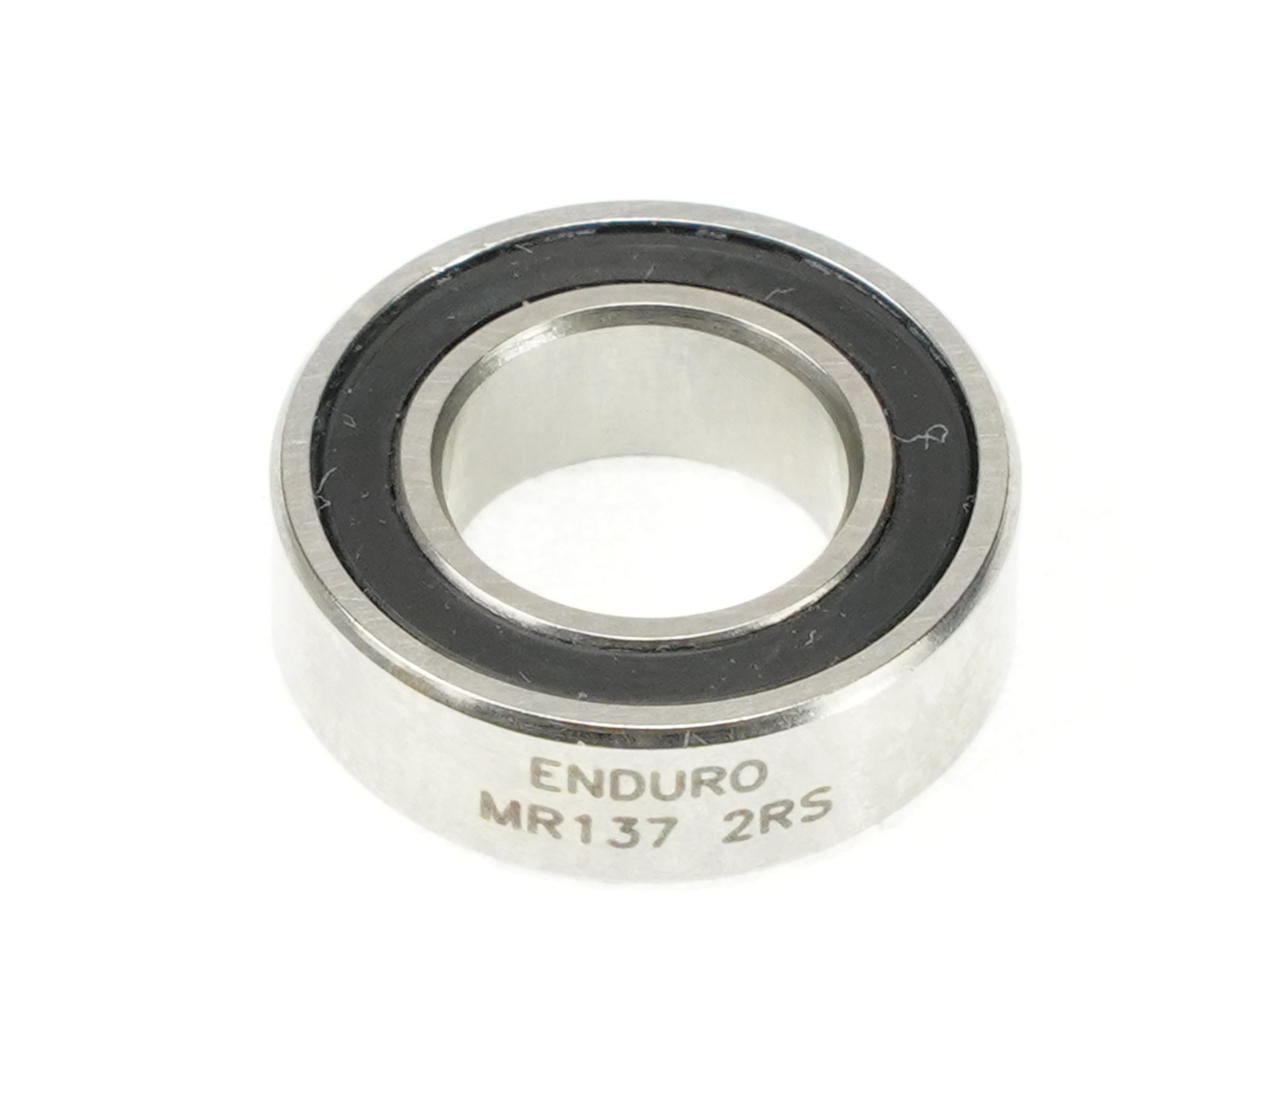 Enduro MR 137 2RS - ABEC-3 Radial Bearing (C3 Clearance) - 7mm x 13mm x 4mm